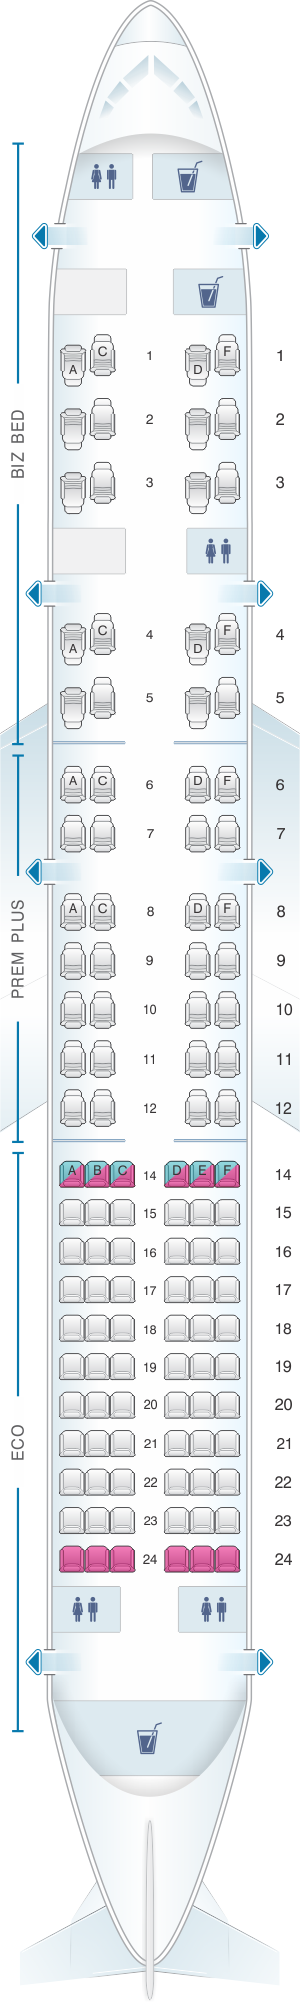 Lufthansa Boeing 757 200 Seating Chart